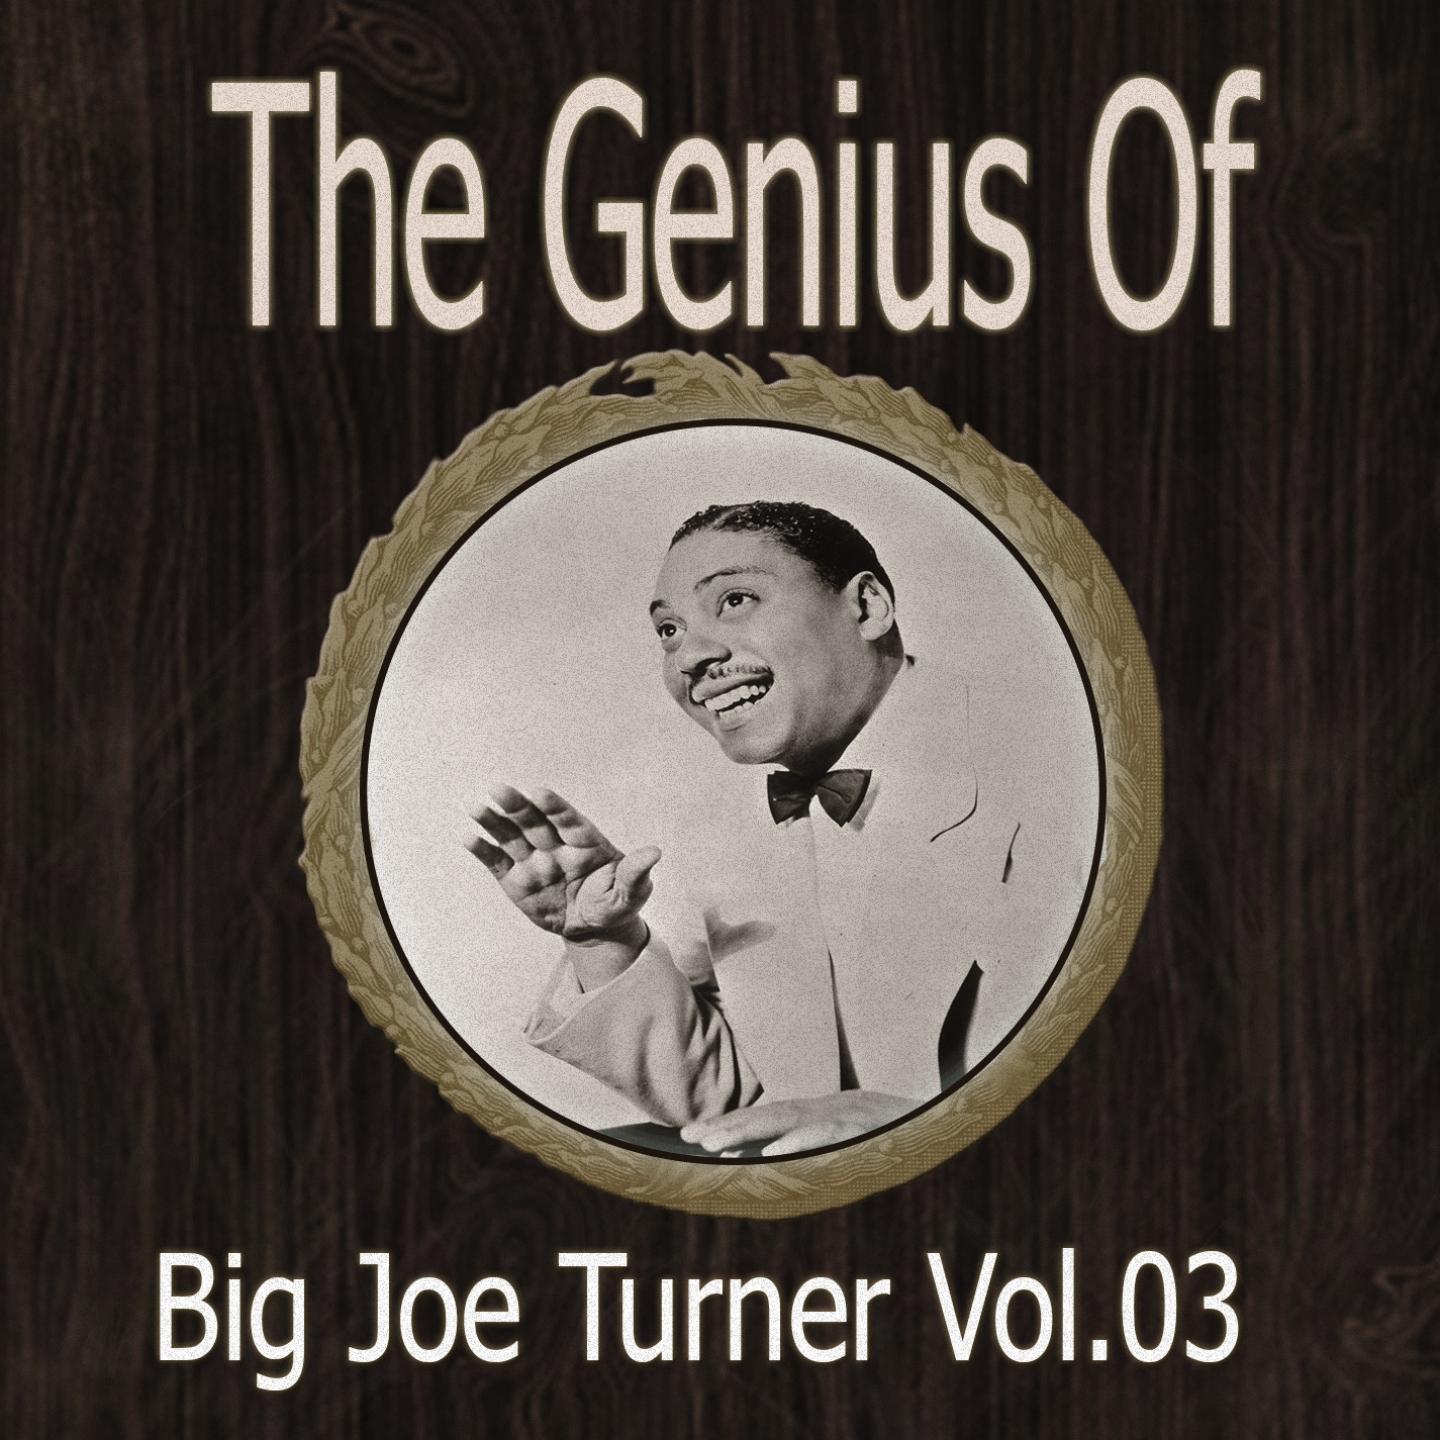 The Genius of Big Joe Turner Vol 03